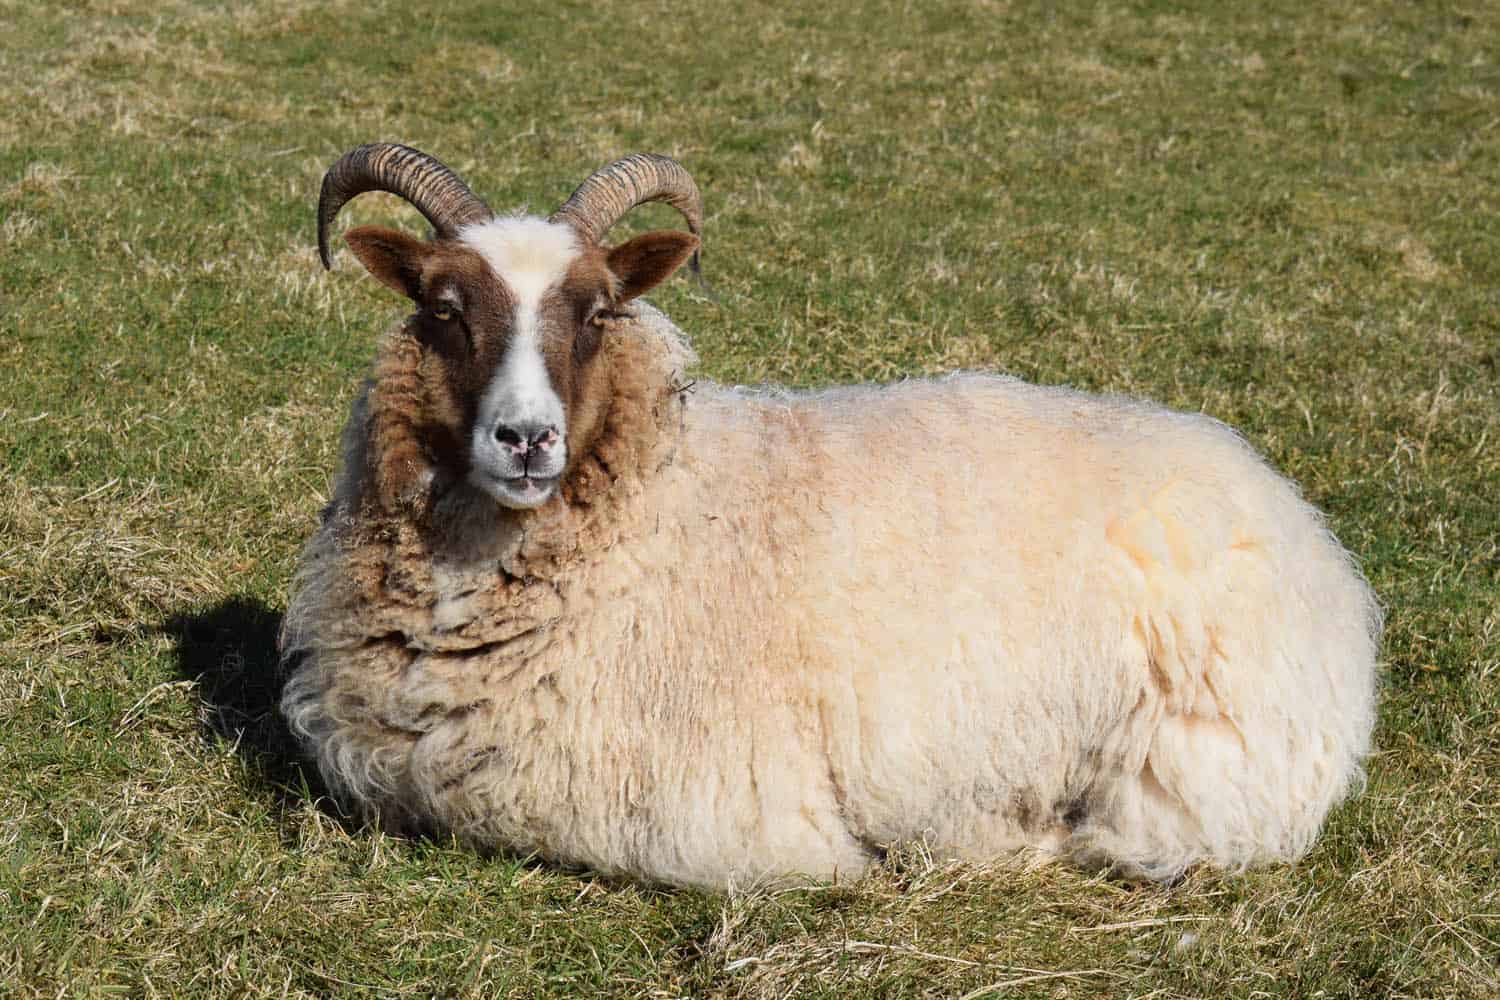 Marmalade moorit spotted patchwork sheep ethical wool soay shetland jacob sheep fleece